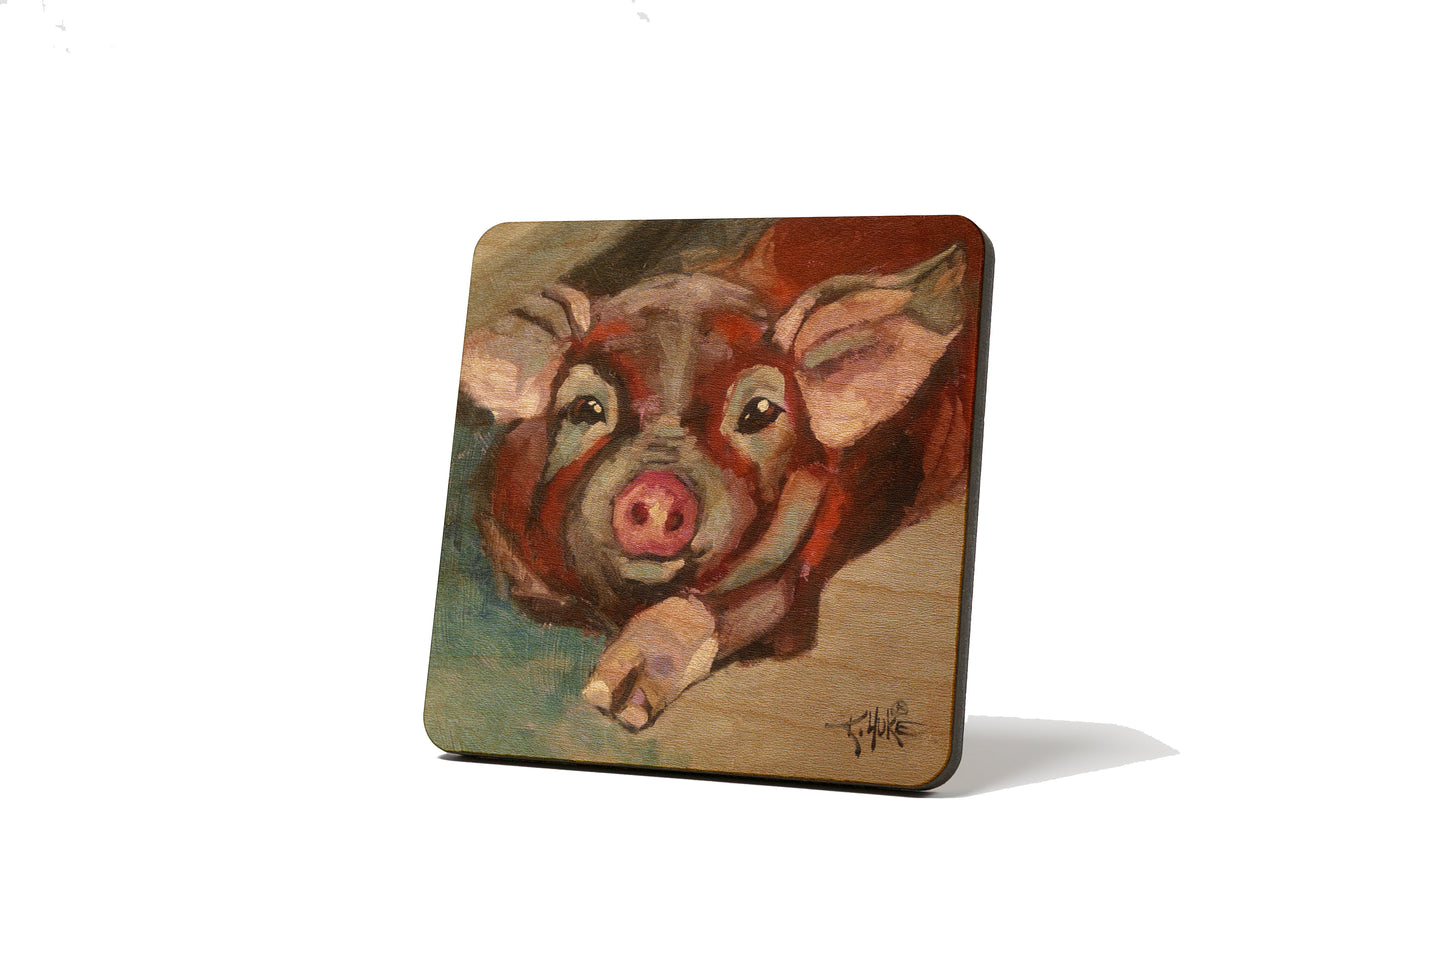 Red Pig Coaster by K. Huke